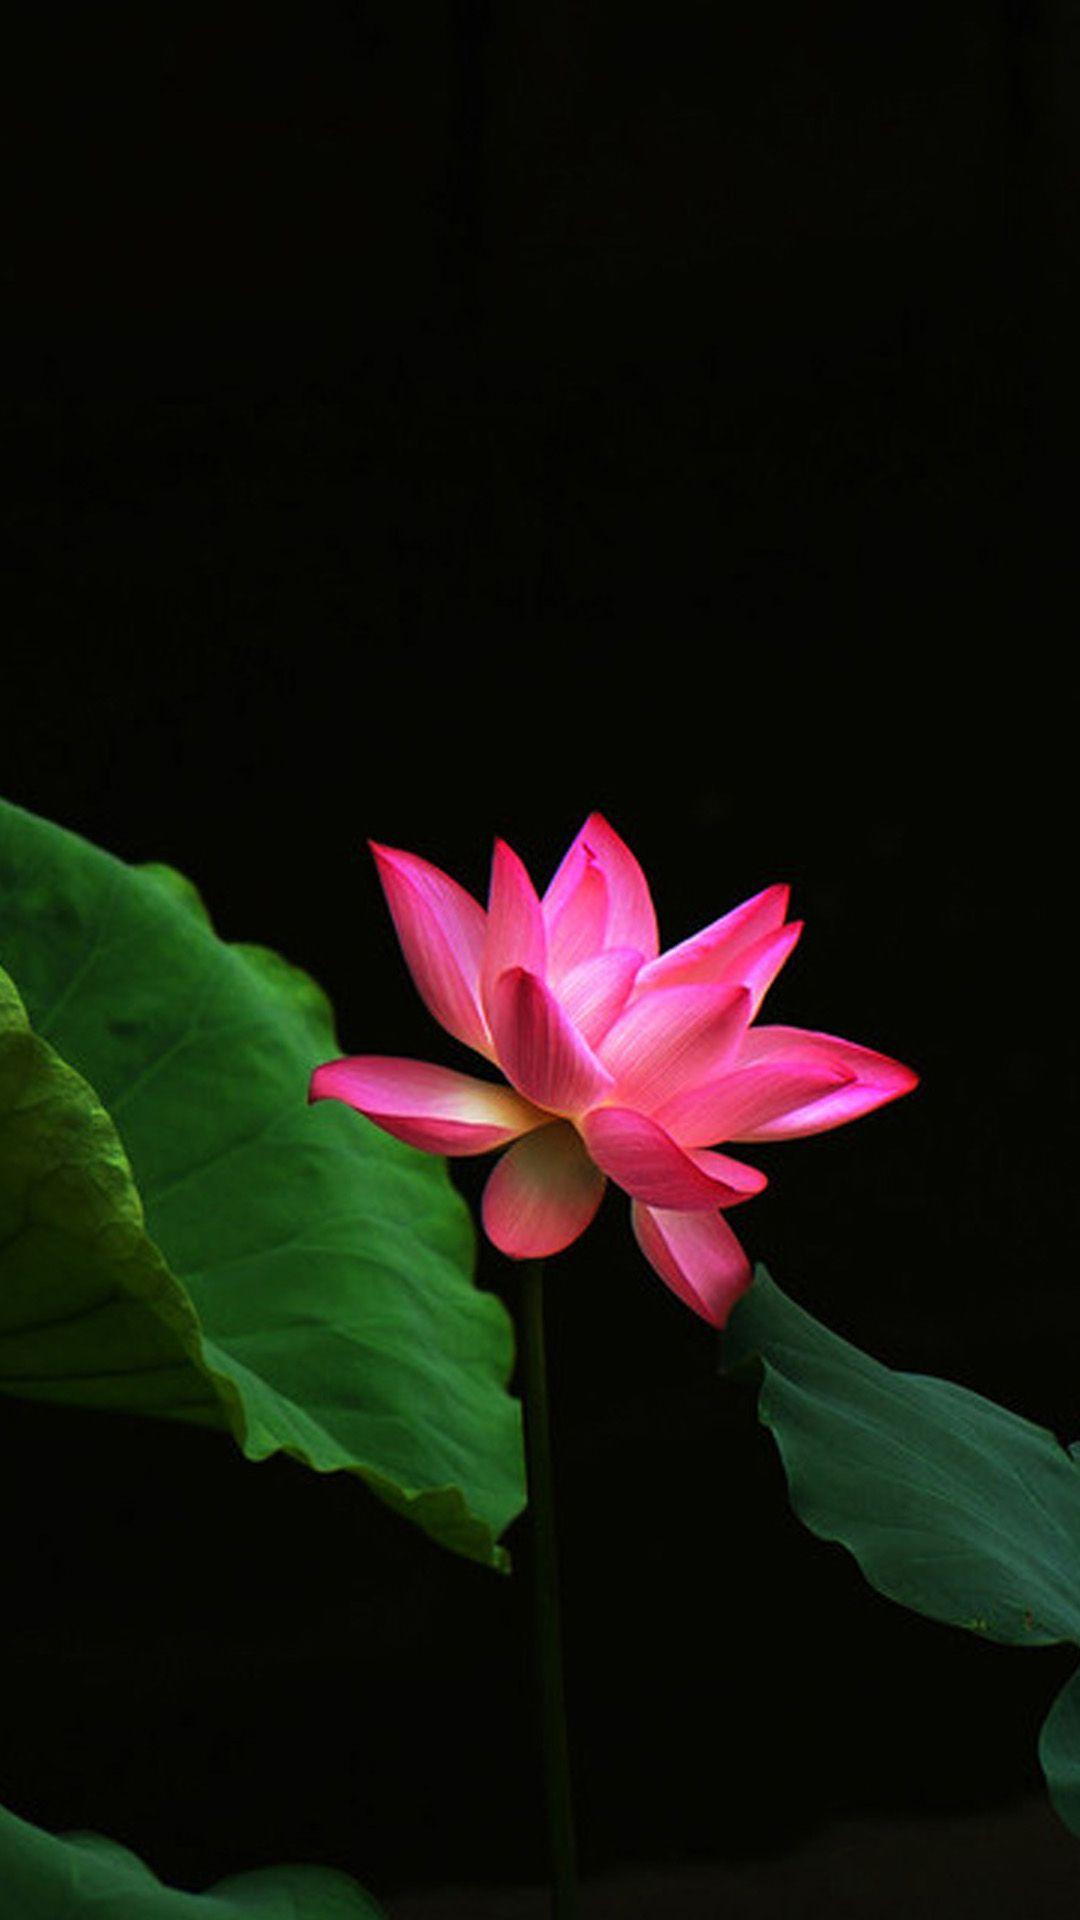 Lotus Flower Galaxy Note 3 Wallpaper